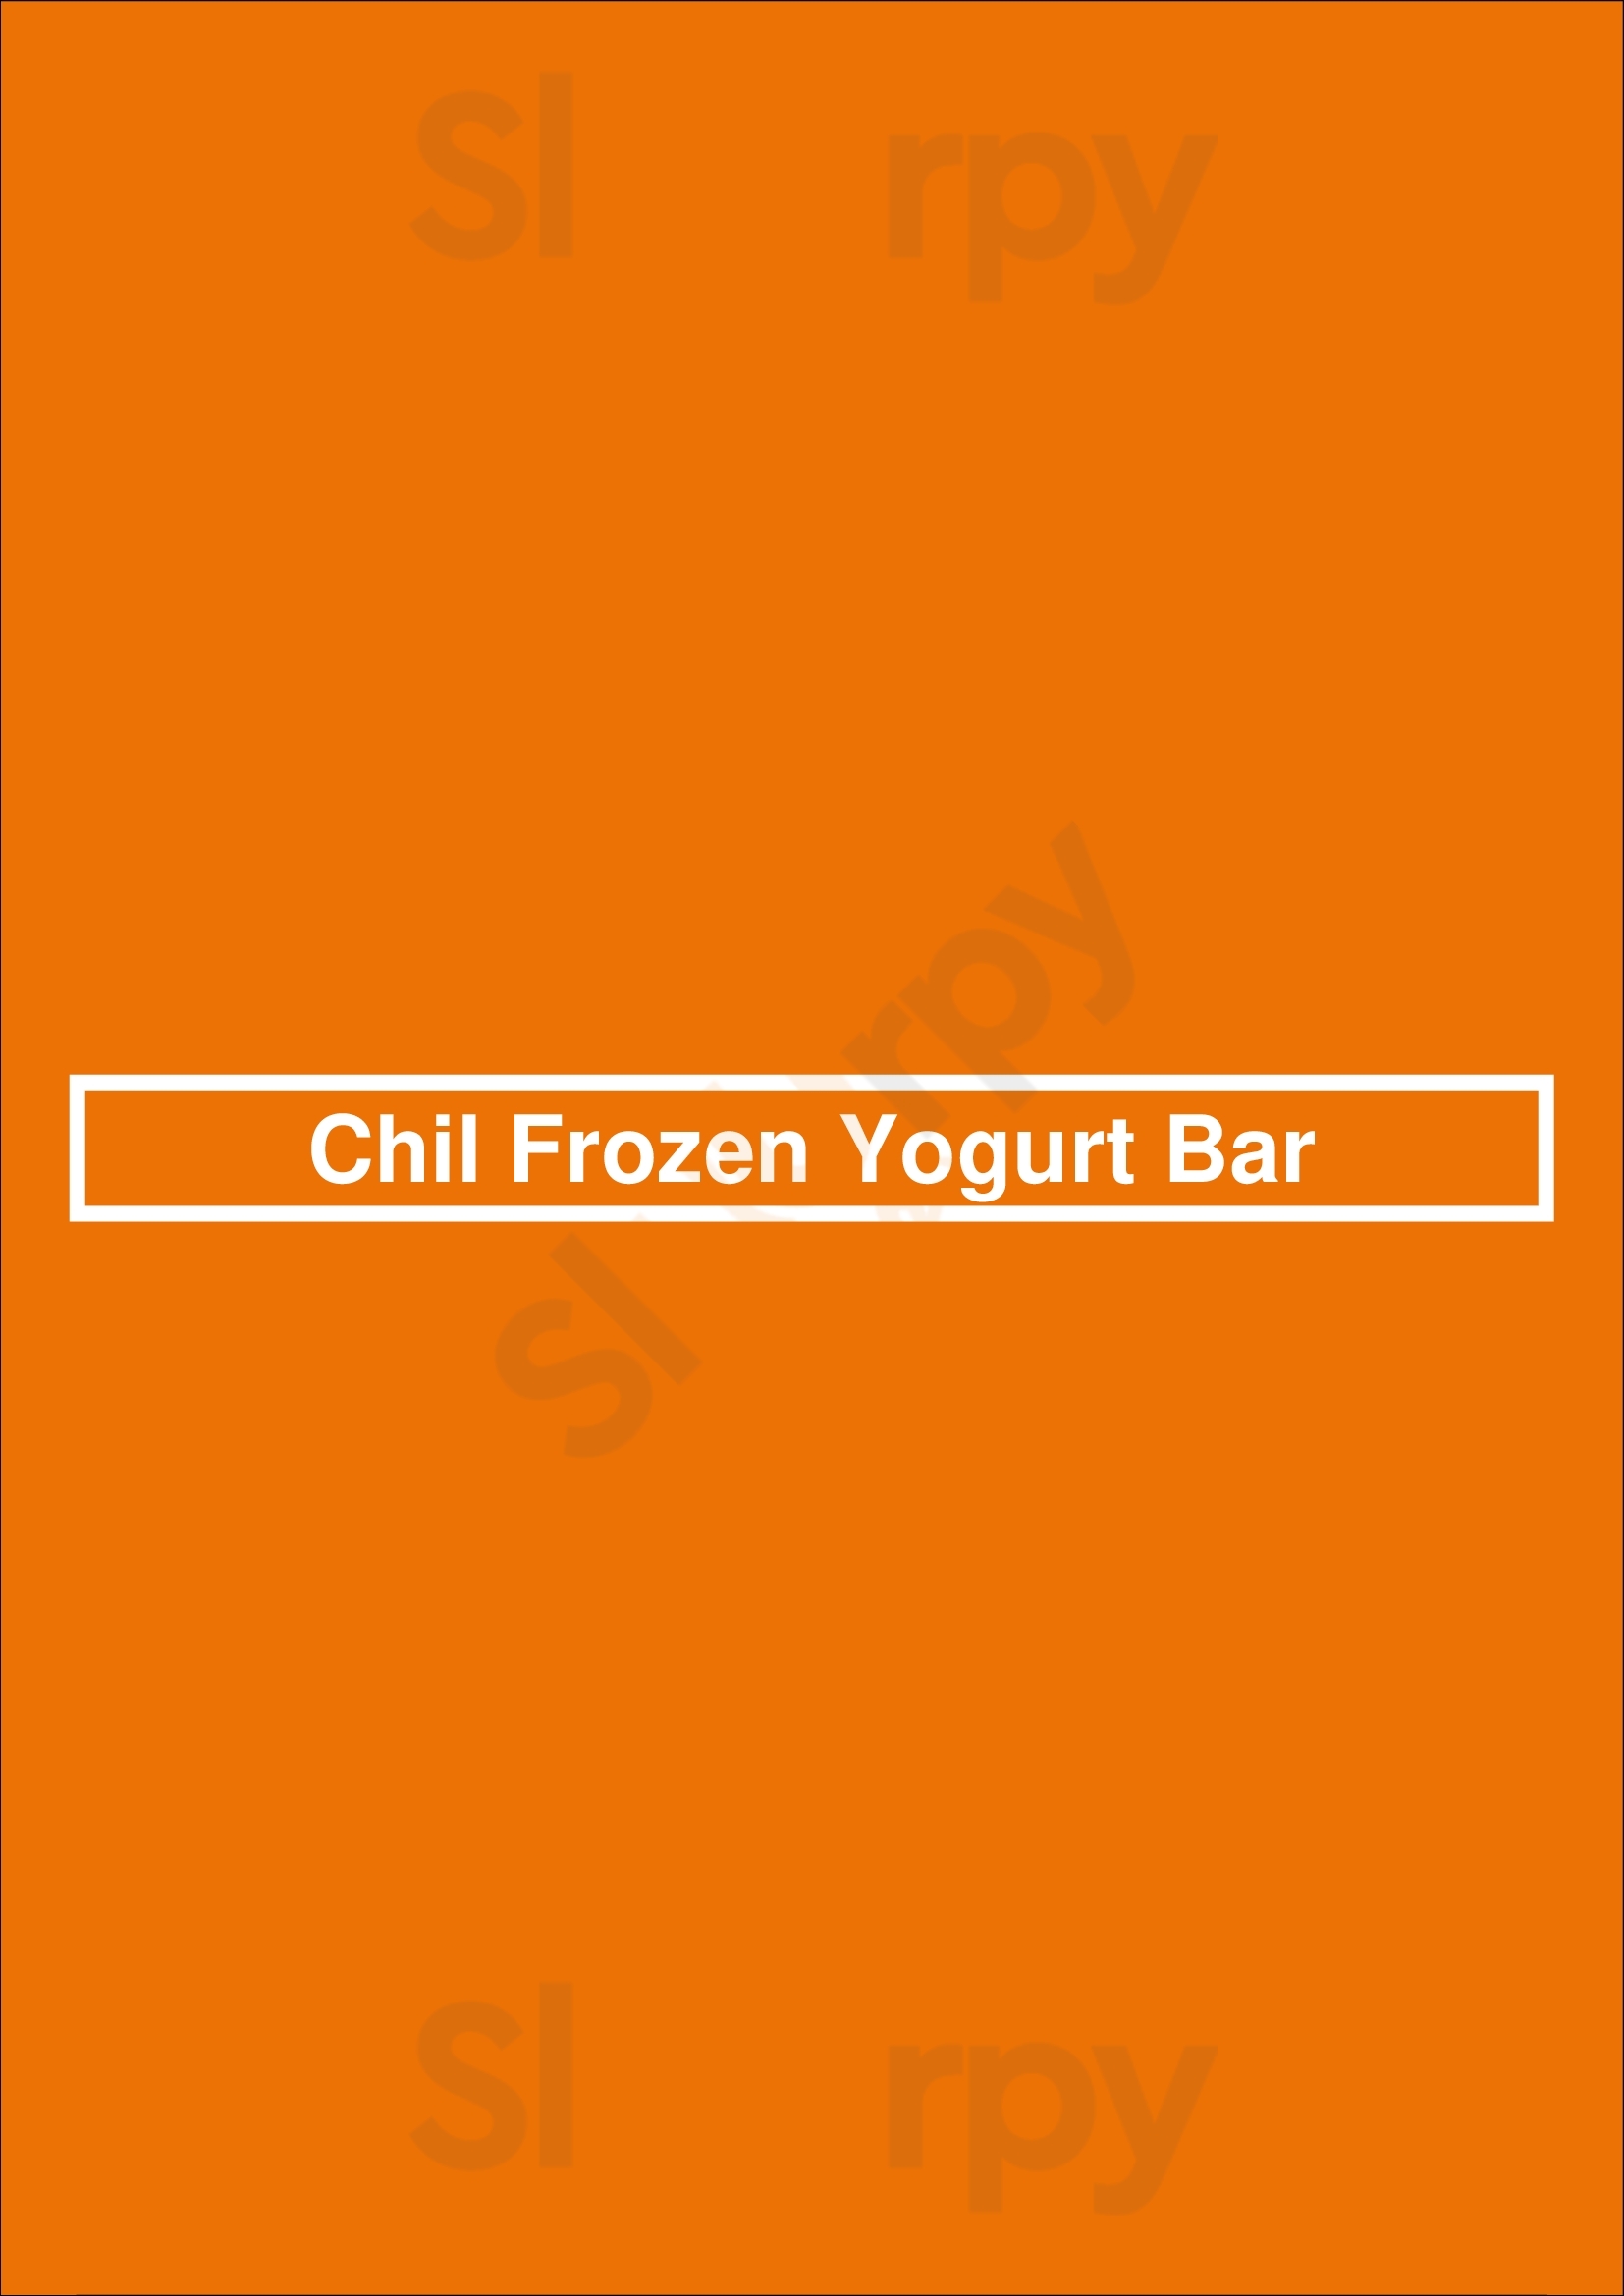 Chil Frozen Yogurt Bar London Menu - 1